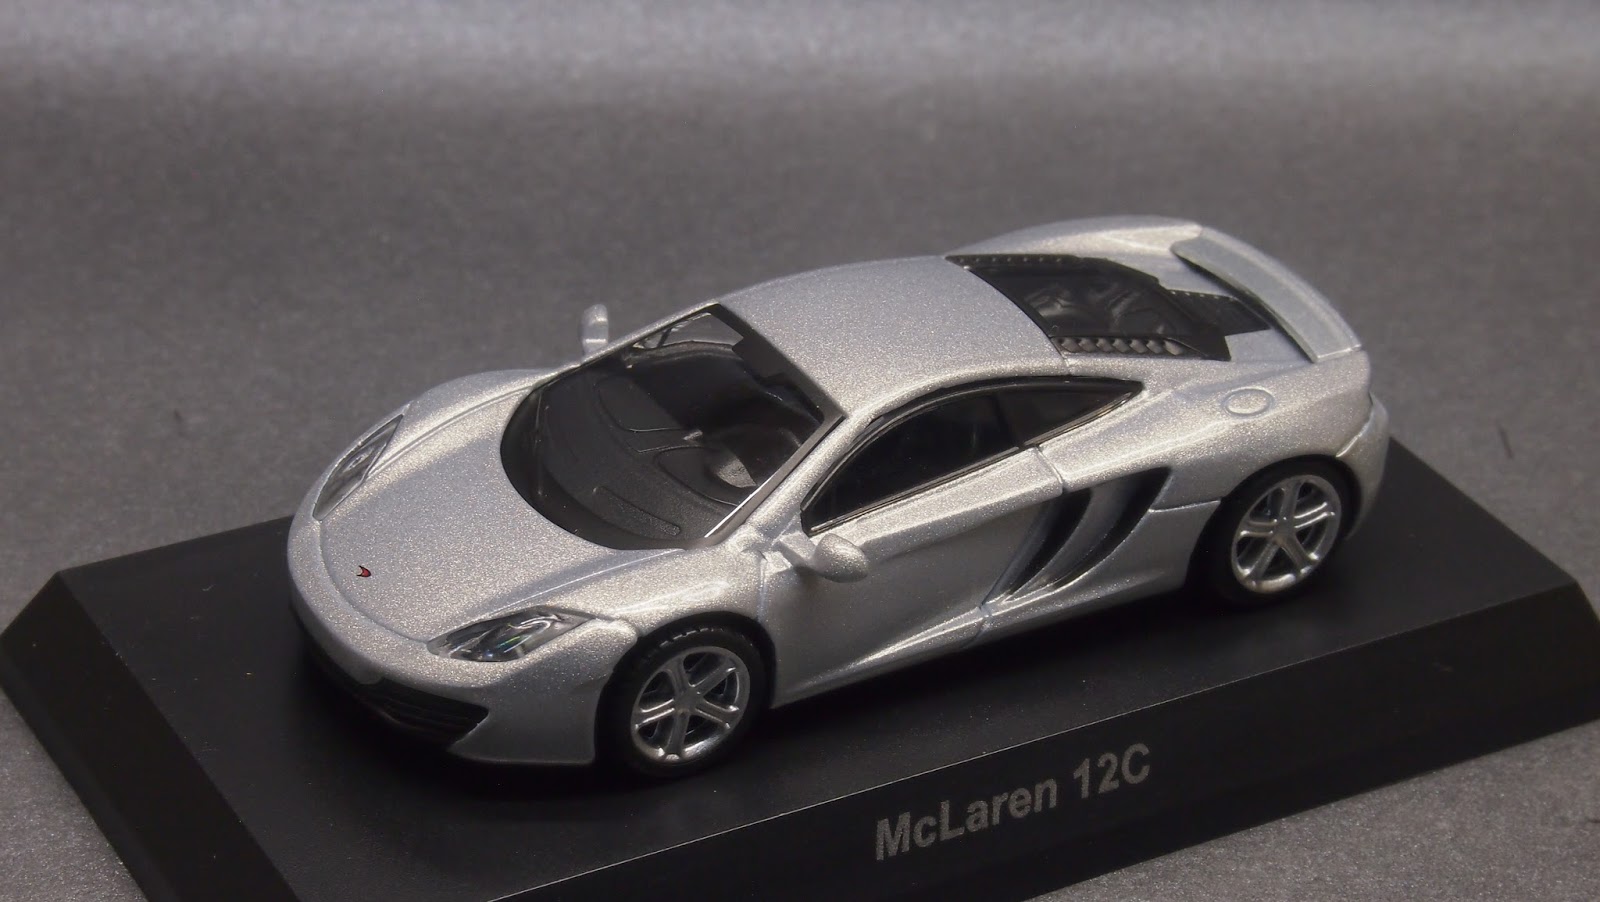 Details about  / 1//64 Kyosho MCLAREN 12C SILVER diecast car model